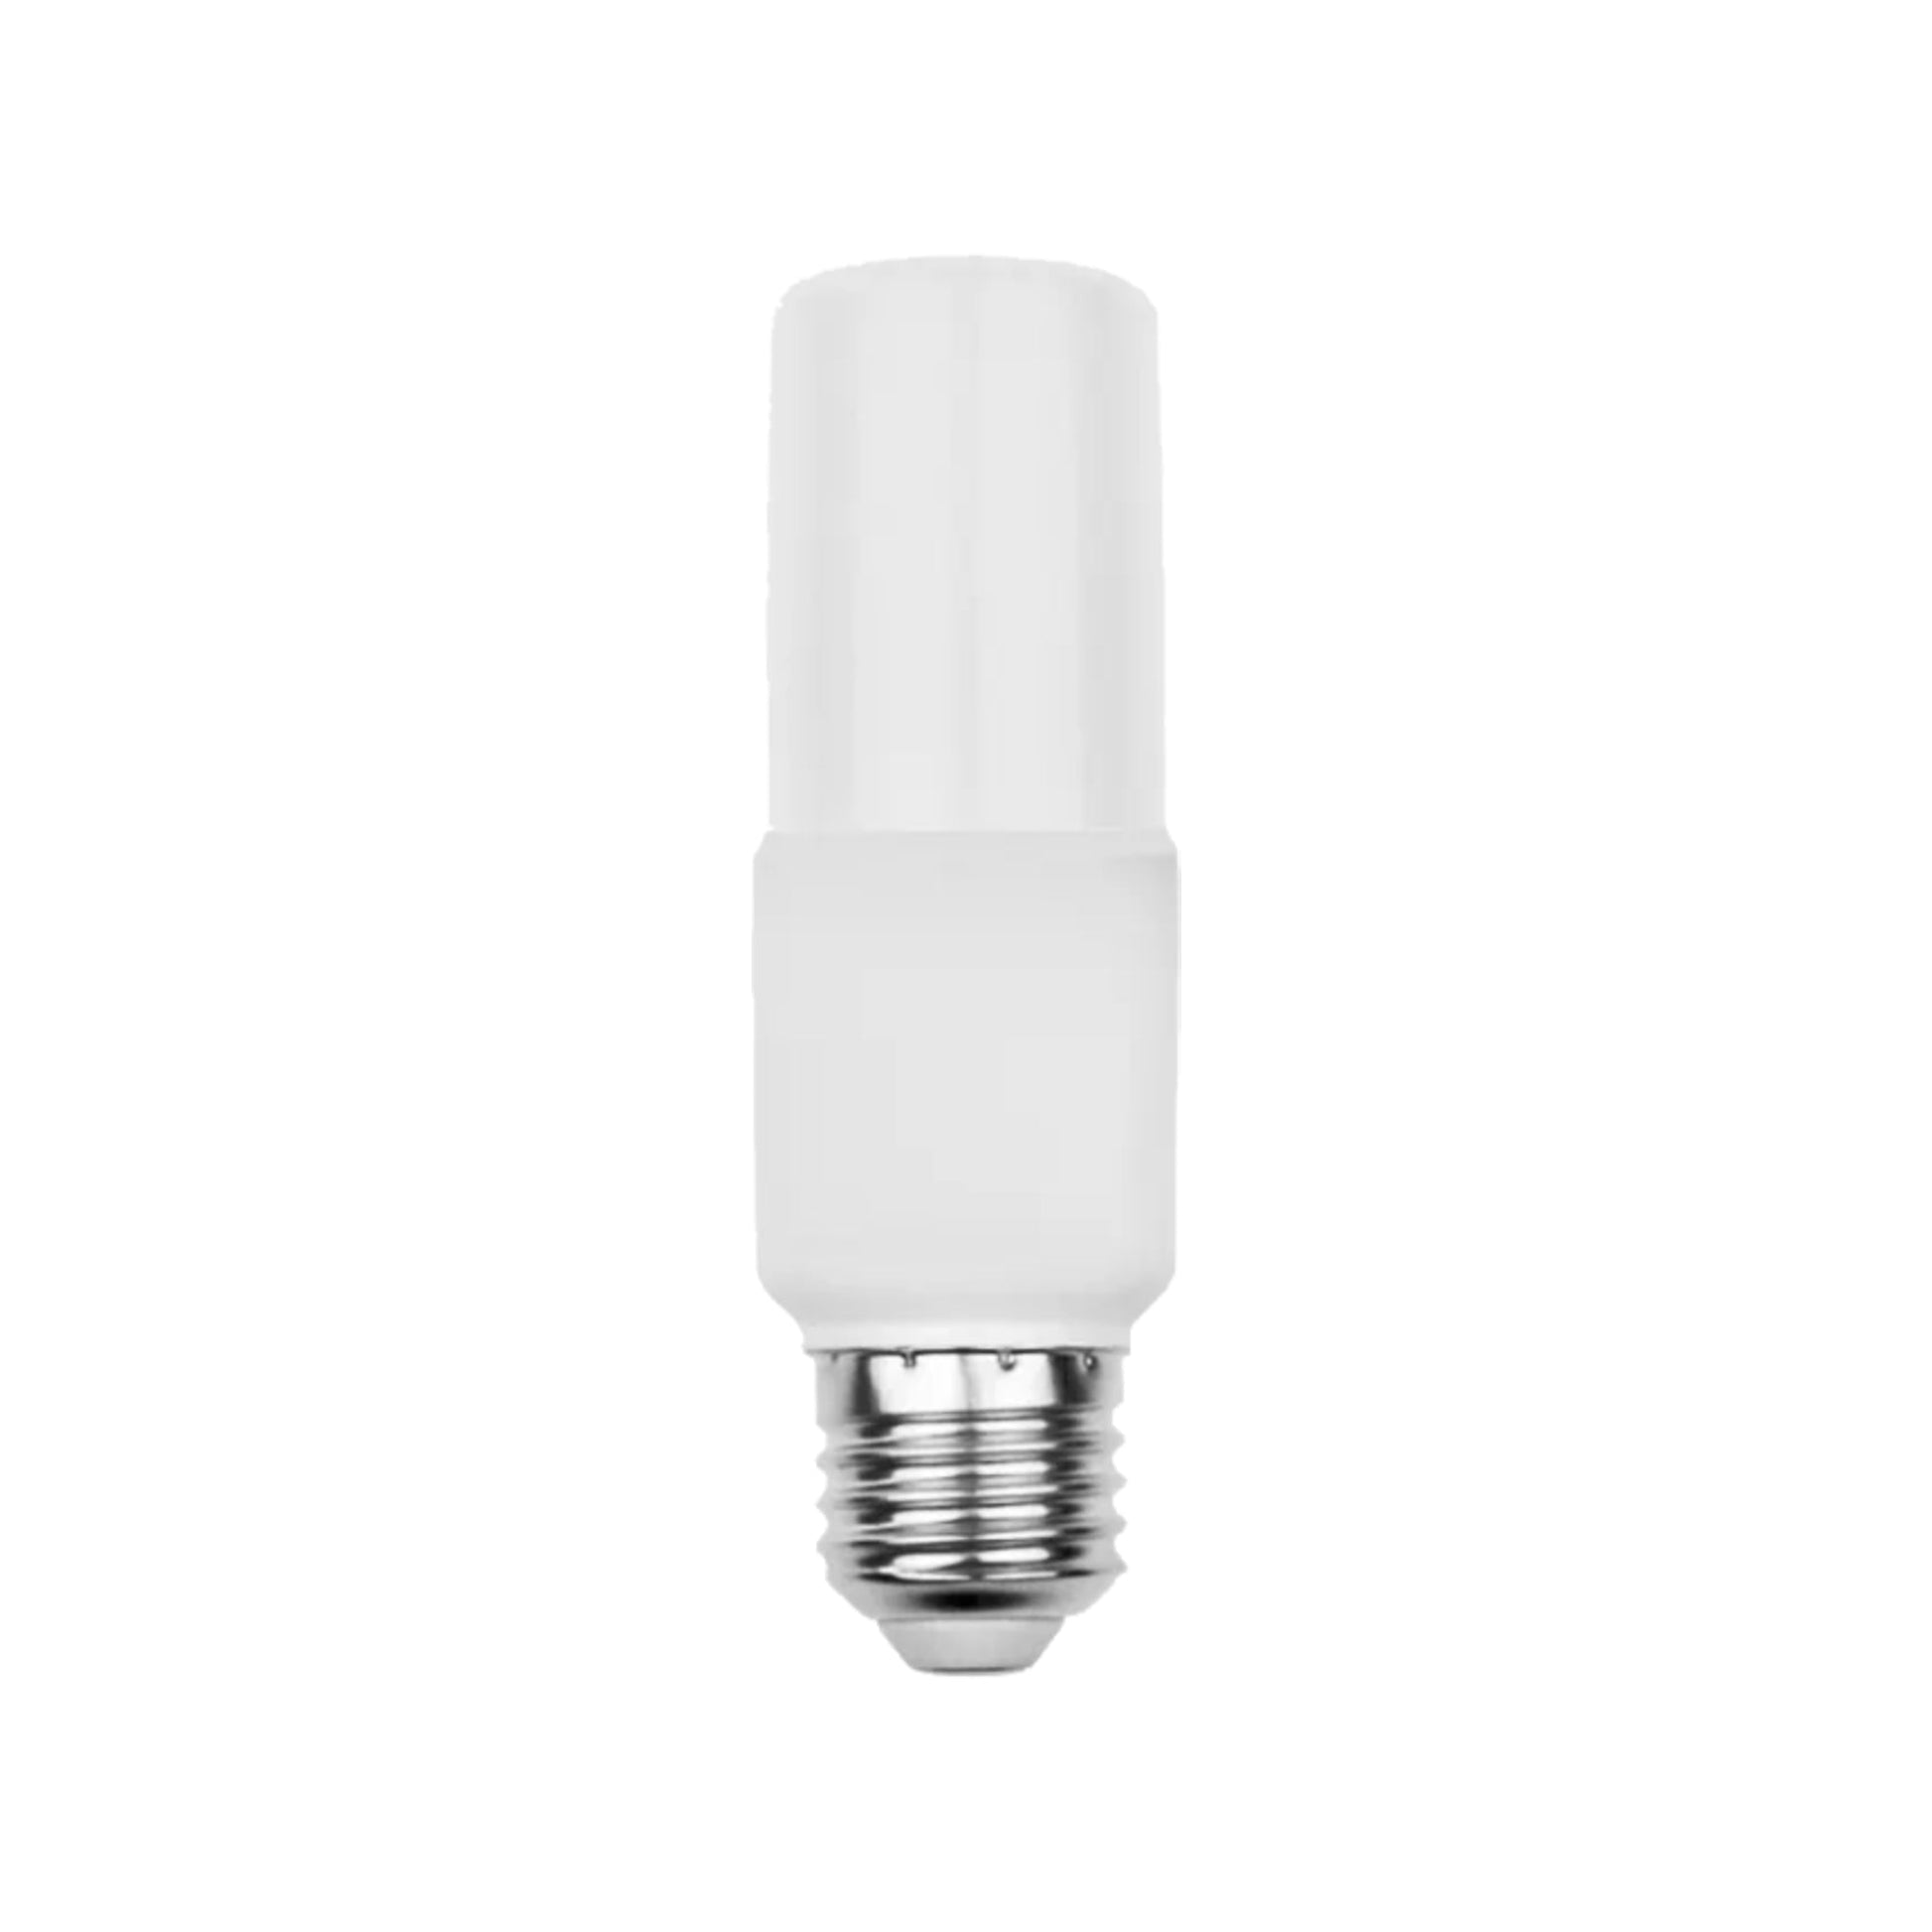 LED Capsule Bulb 7W E27 Holder Ecoshift Shopify